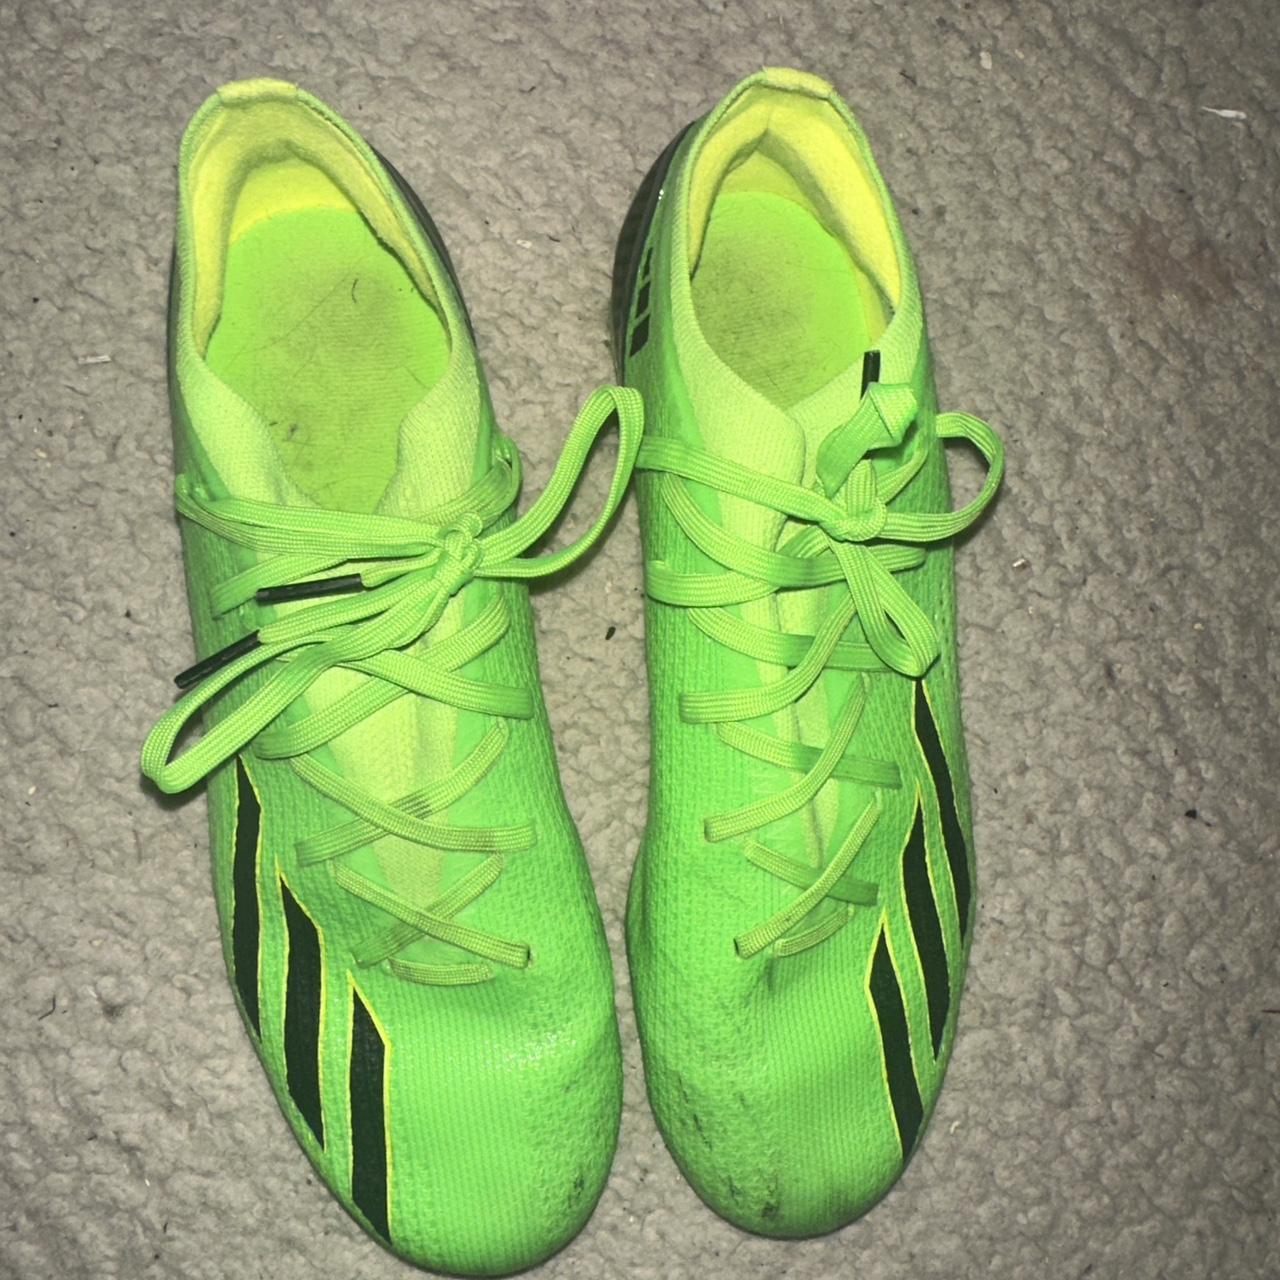 Adidas speed portal football boots size 7 worn only... - Depop